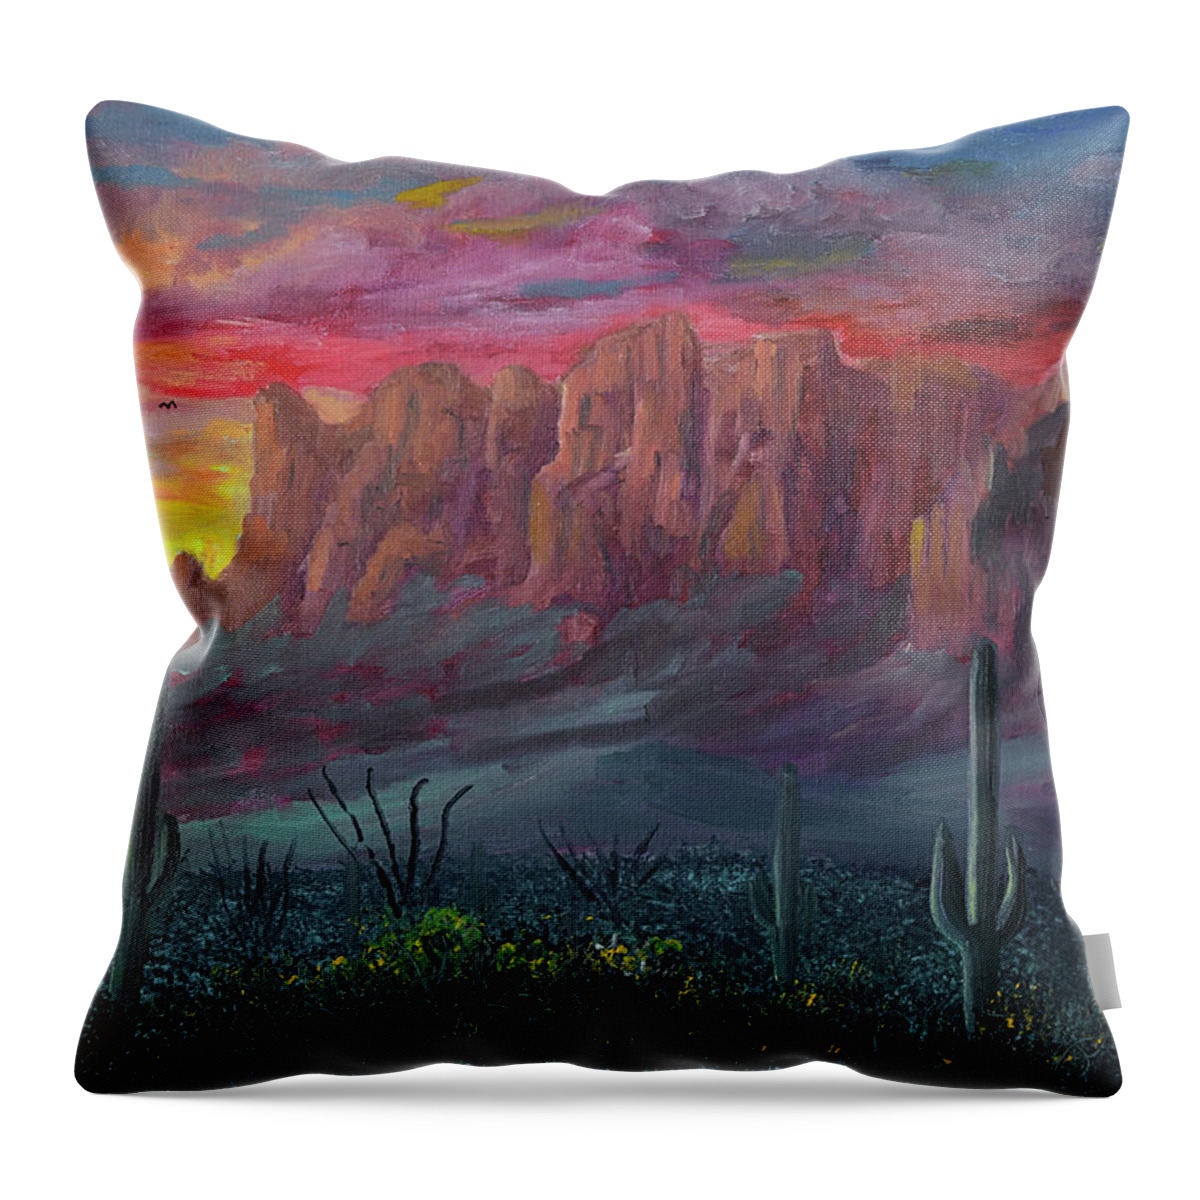 Superstition Mountains Throw Pillow featuring the painting Superstition Mountains Sunrise by Chance Kafka